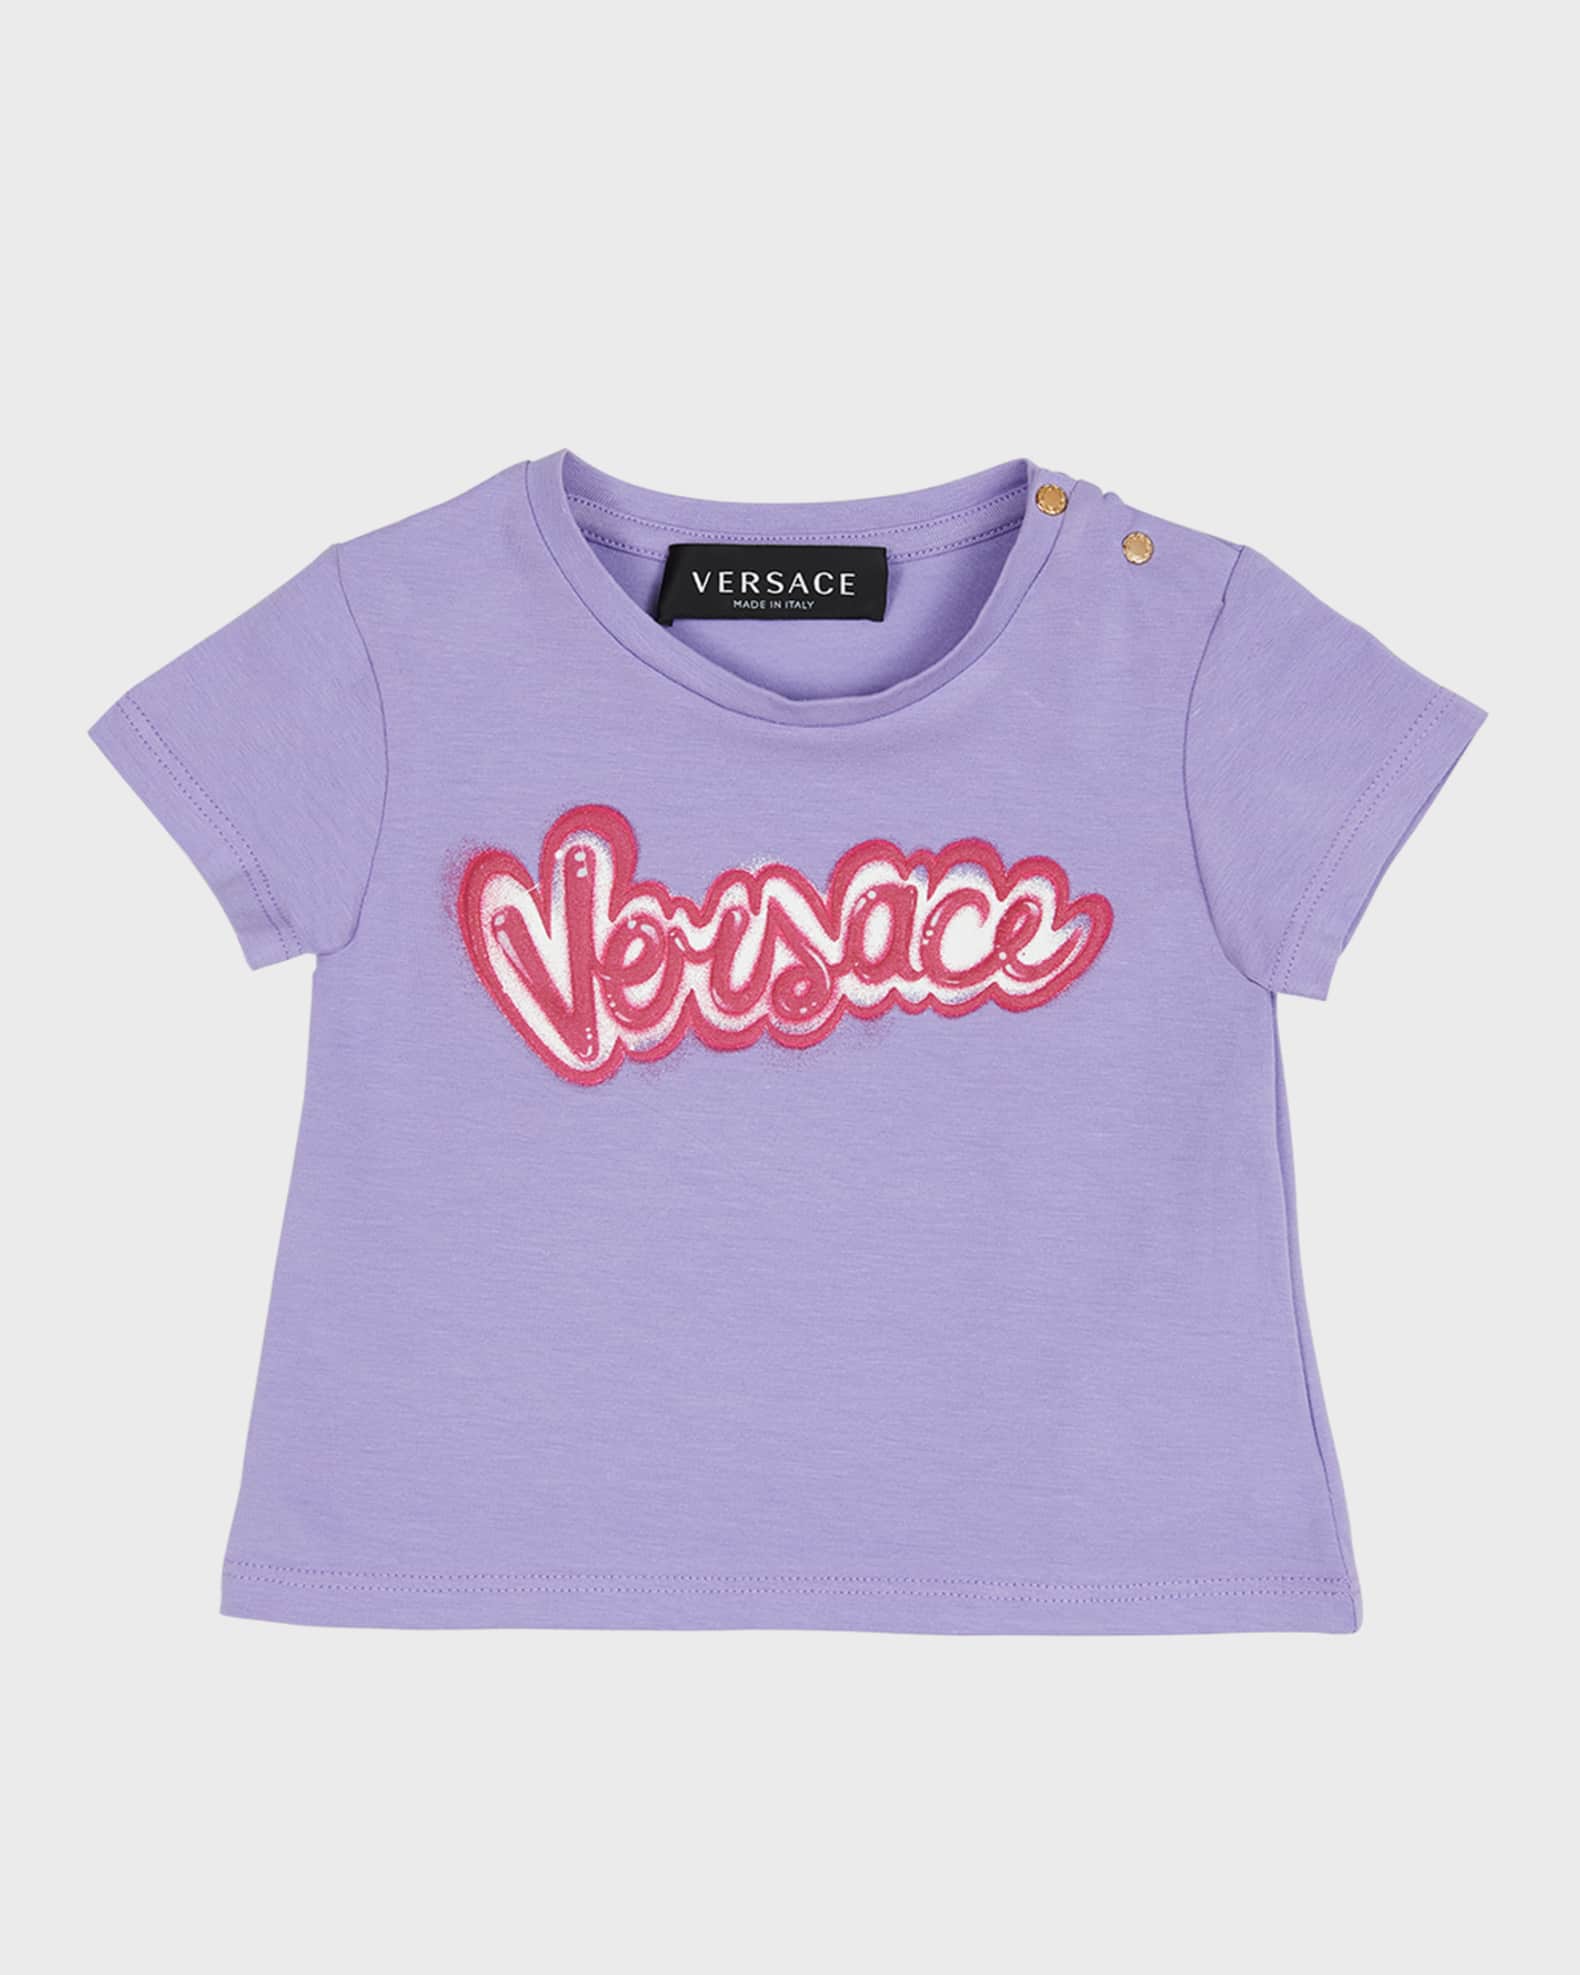 Versace logo, Gianni Versace Medusa Italian fashion, fashion shoes, purple,  text png